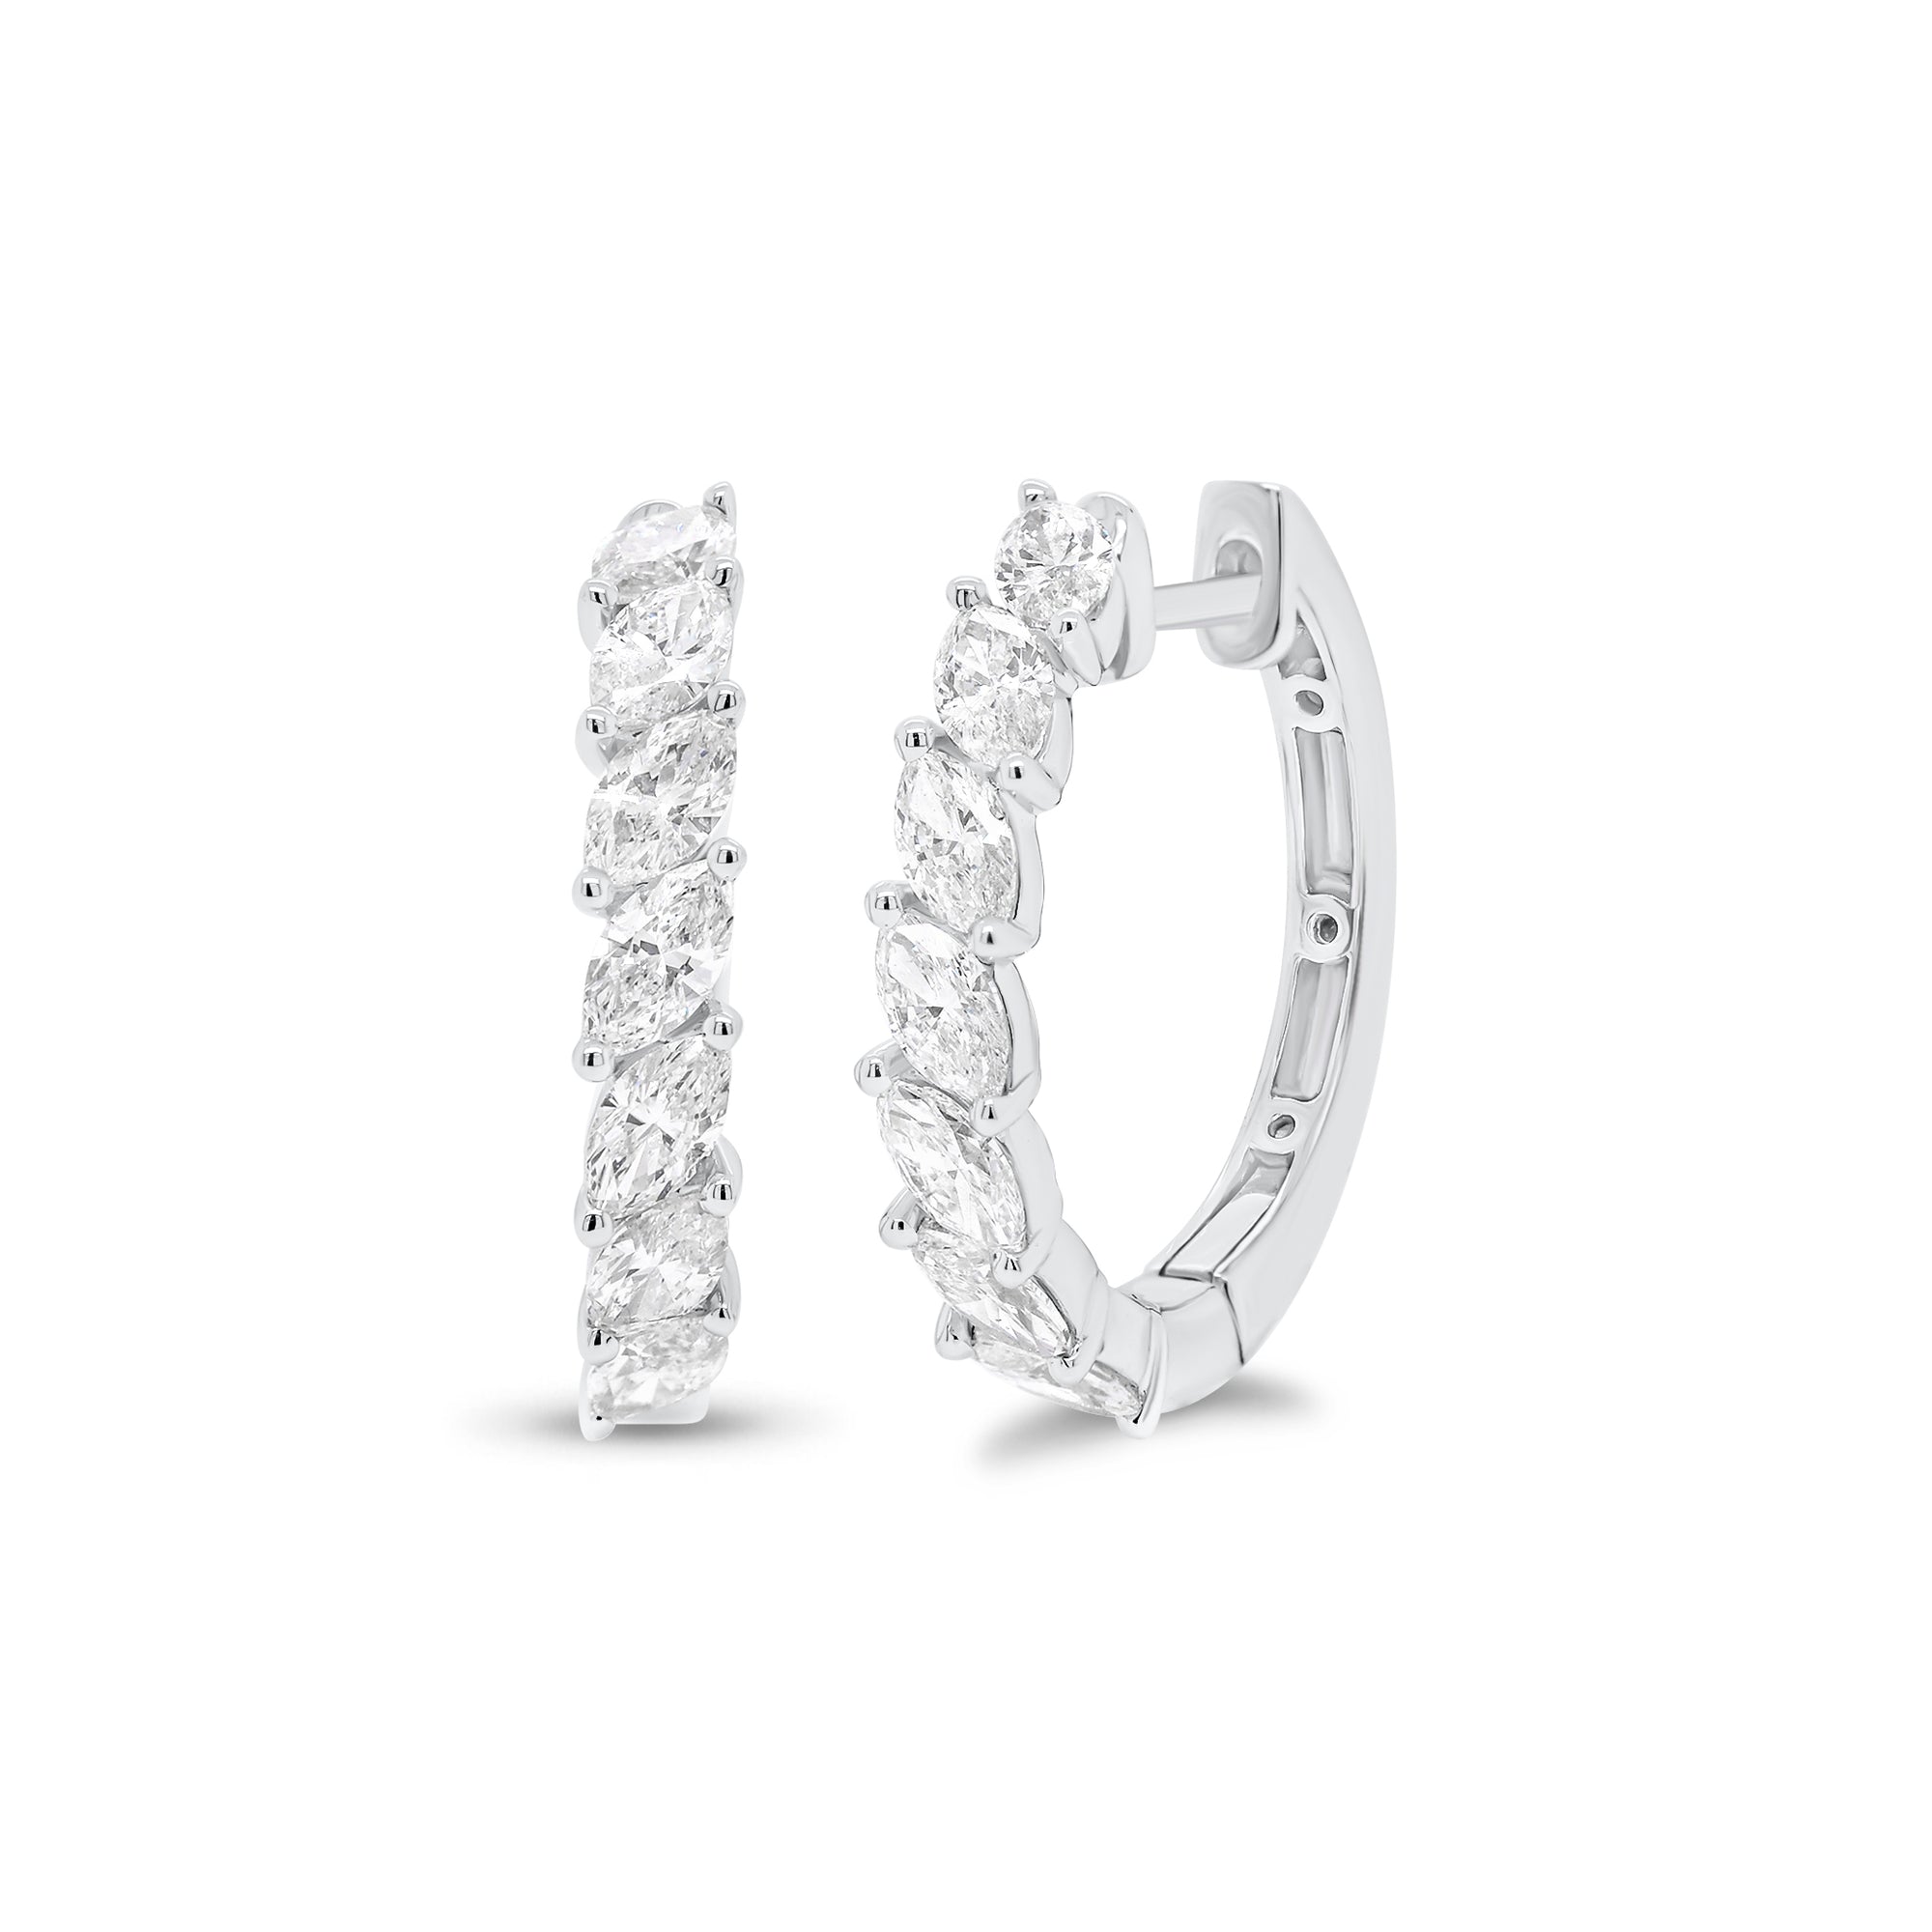 Marquise-Shaped Diamond Huggies - 18K white gold weighing 3.82 grams  - 14 marquise-shaped diamonds weighing 1.12 carats